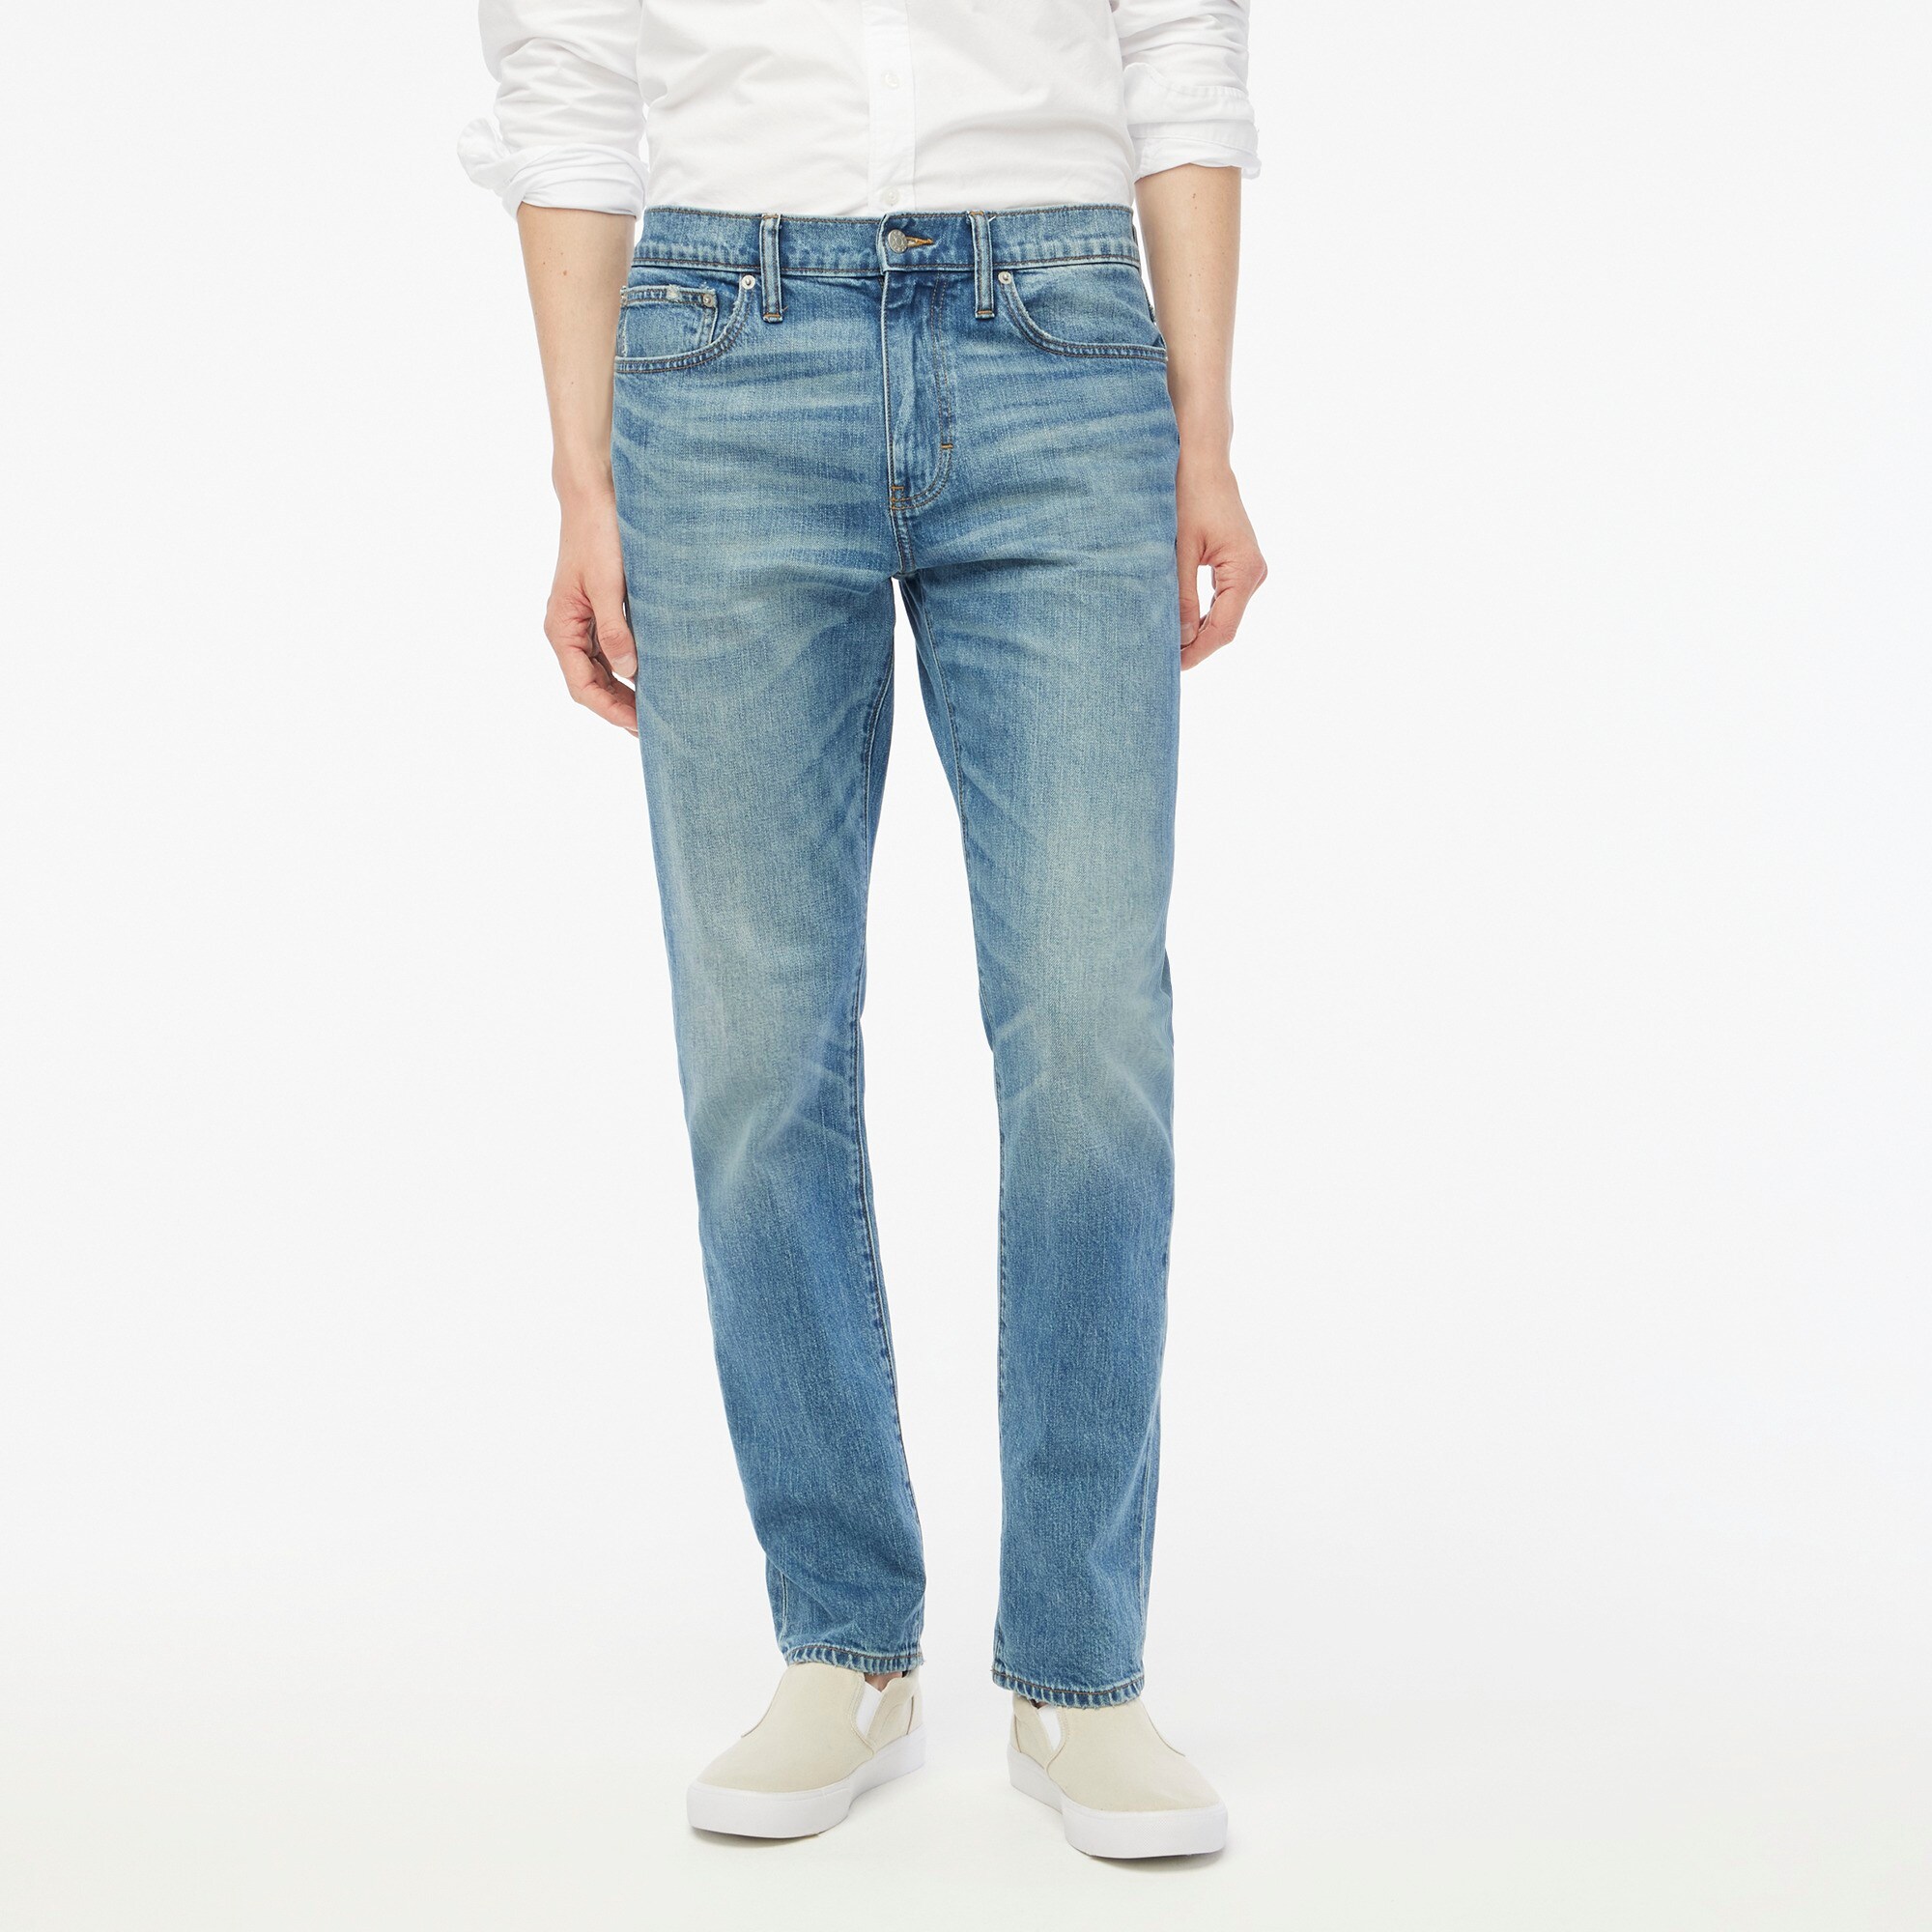  Straight-fit jean in vintage flex